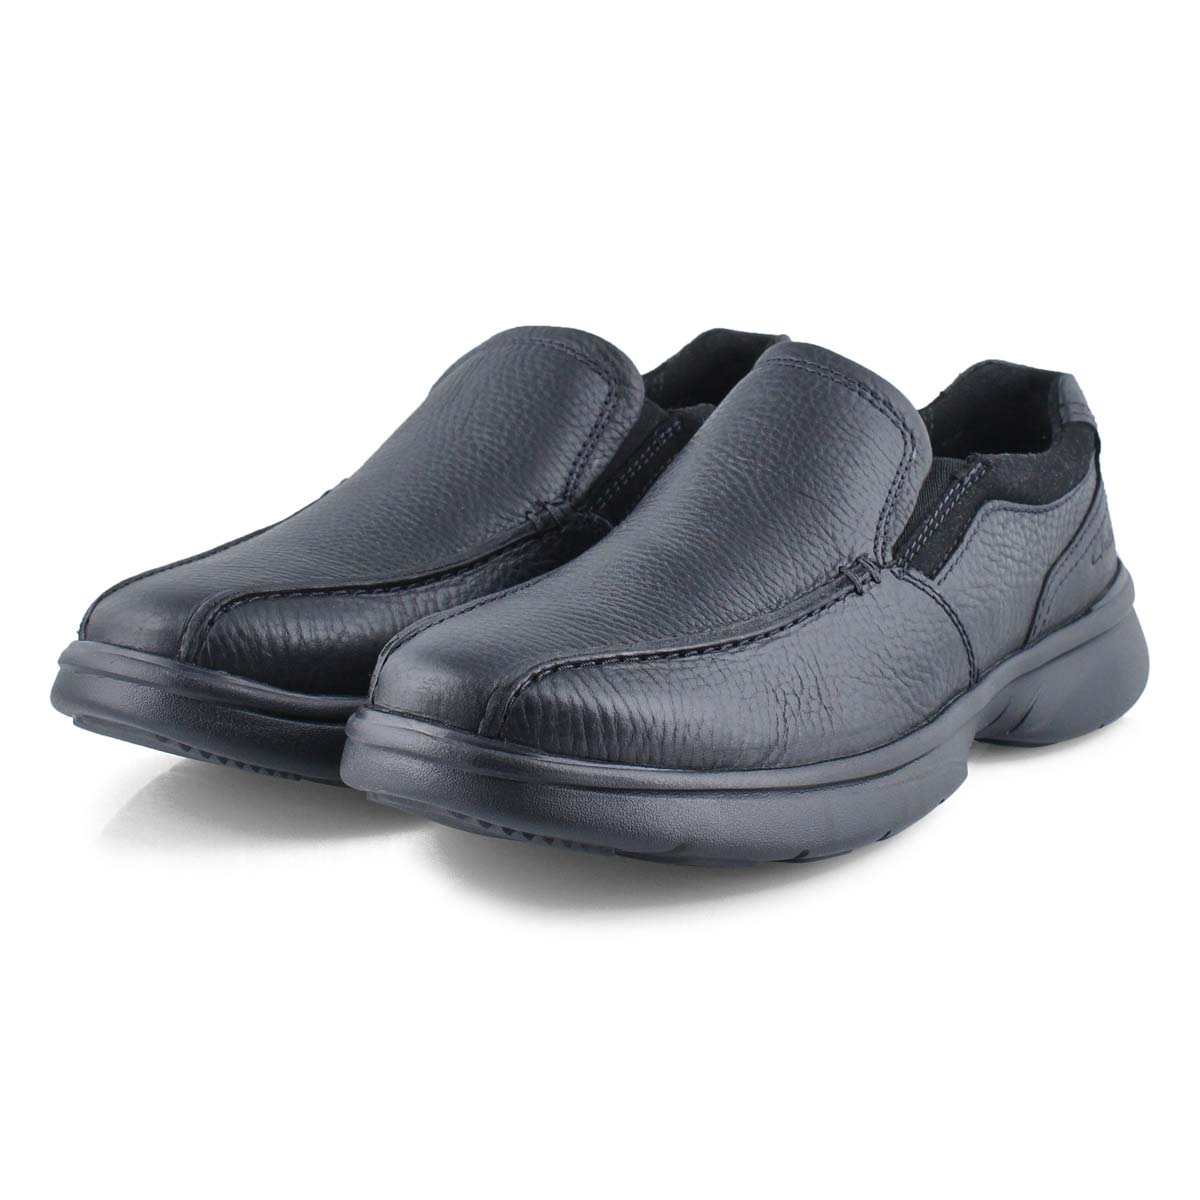 Men's Bradley Step Casual Wide Shoe - Black